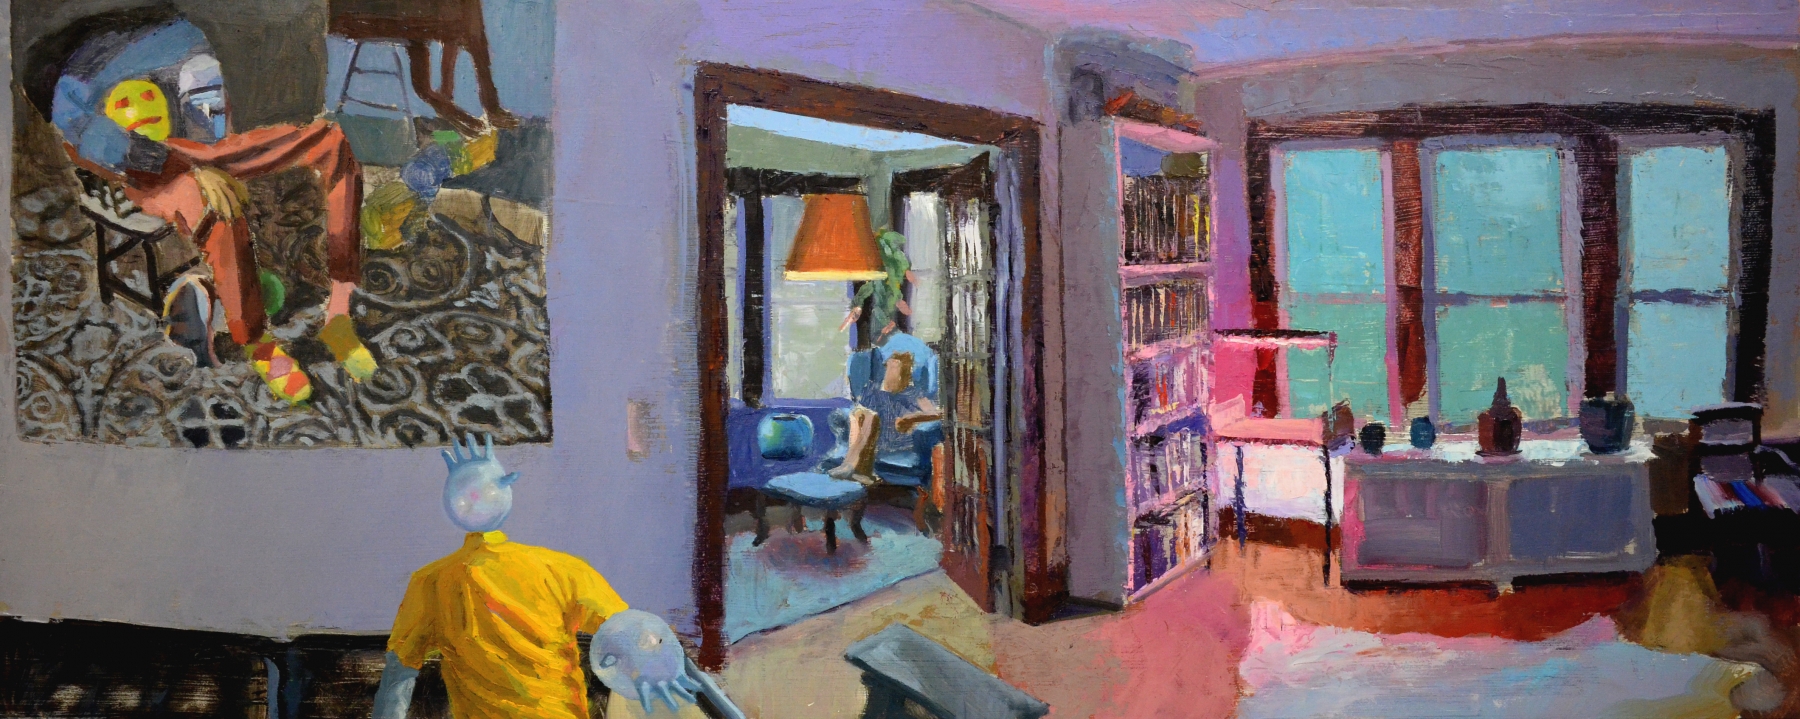 Living Room, 2020, Oil on Panel